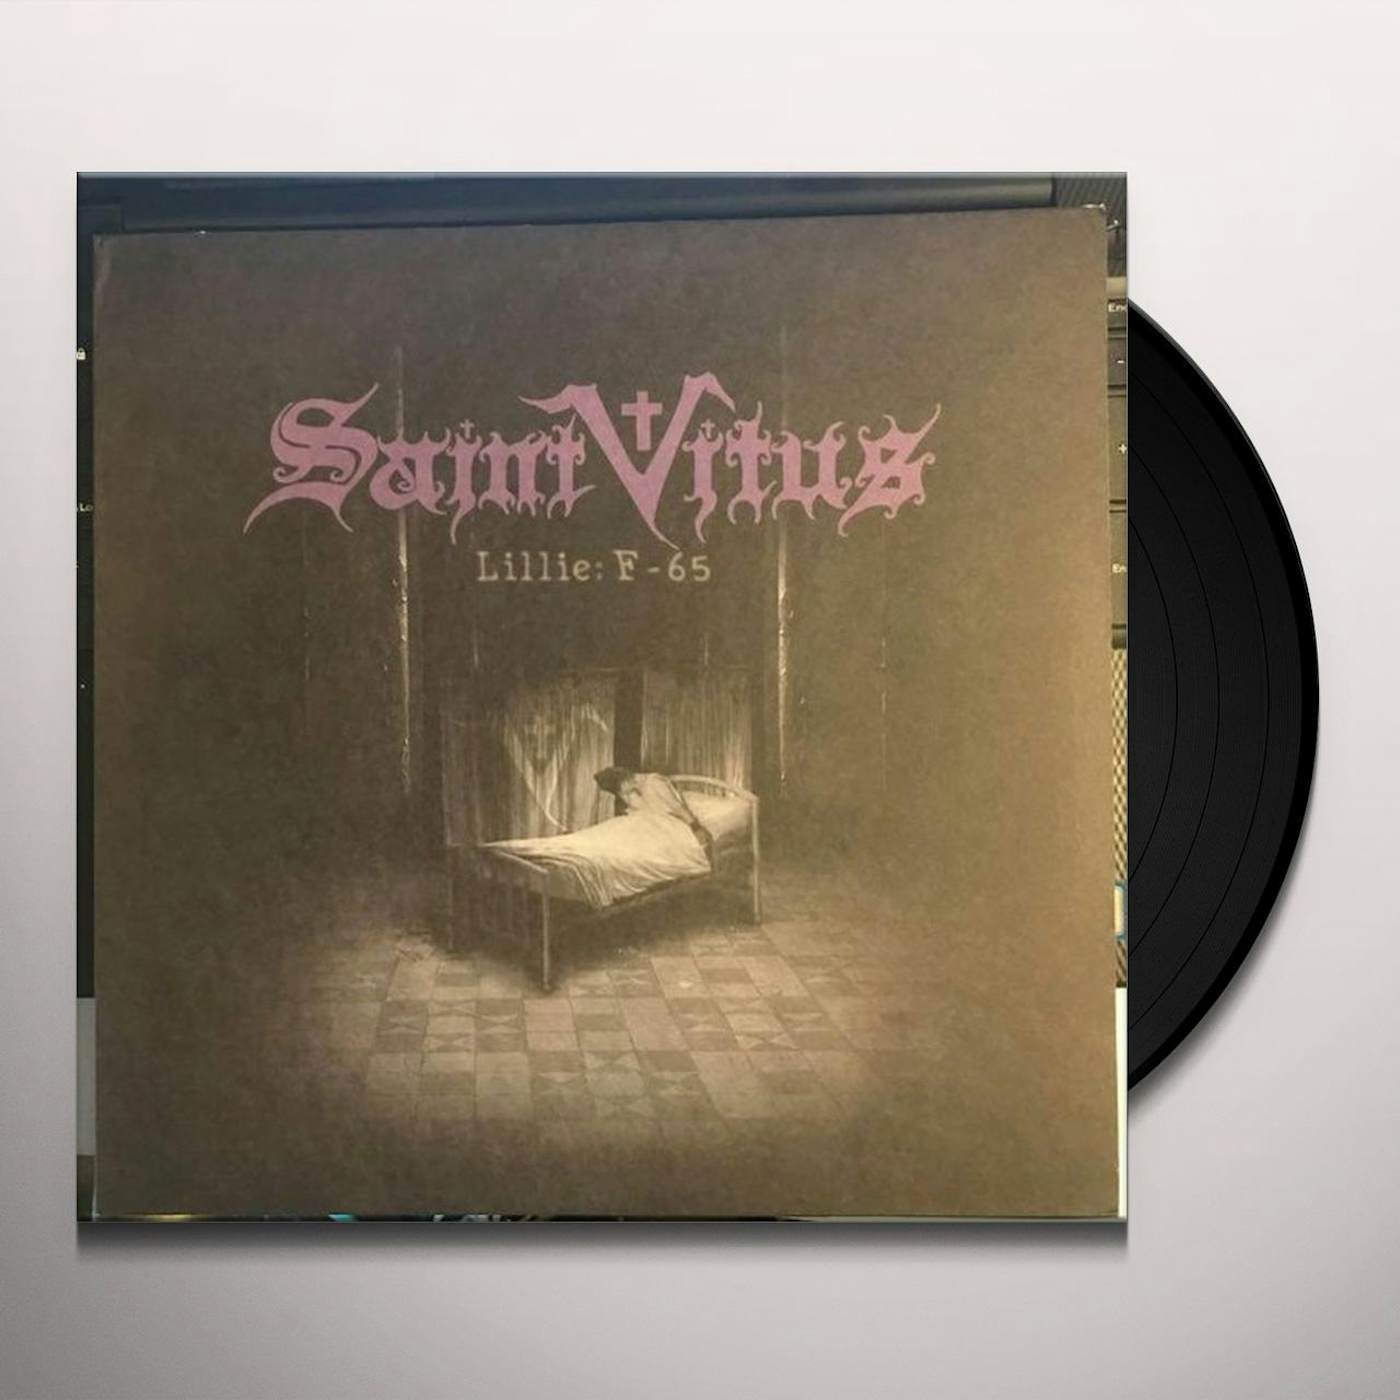 Saint Vitus Lillie: F-65 Vinyl Record